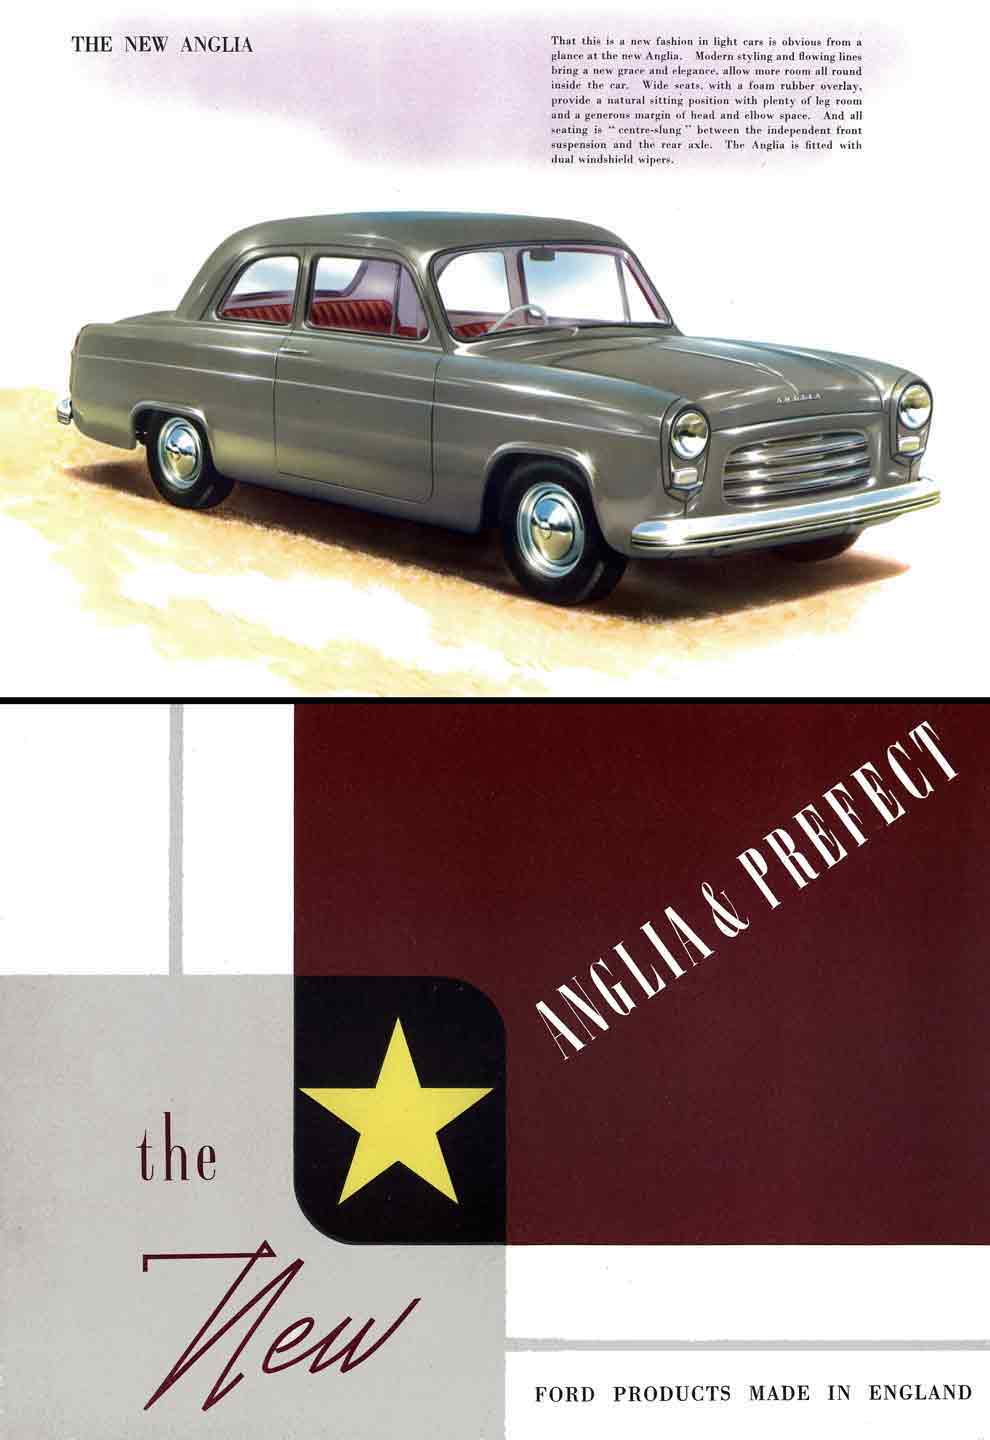 Ford Anglia & Perfect (c1953) - The New Anglia & Perfect